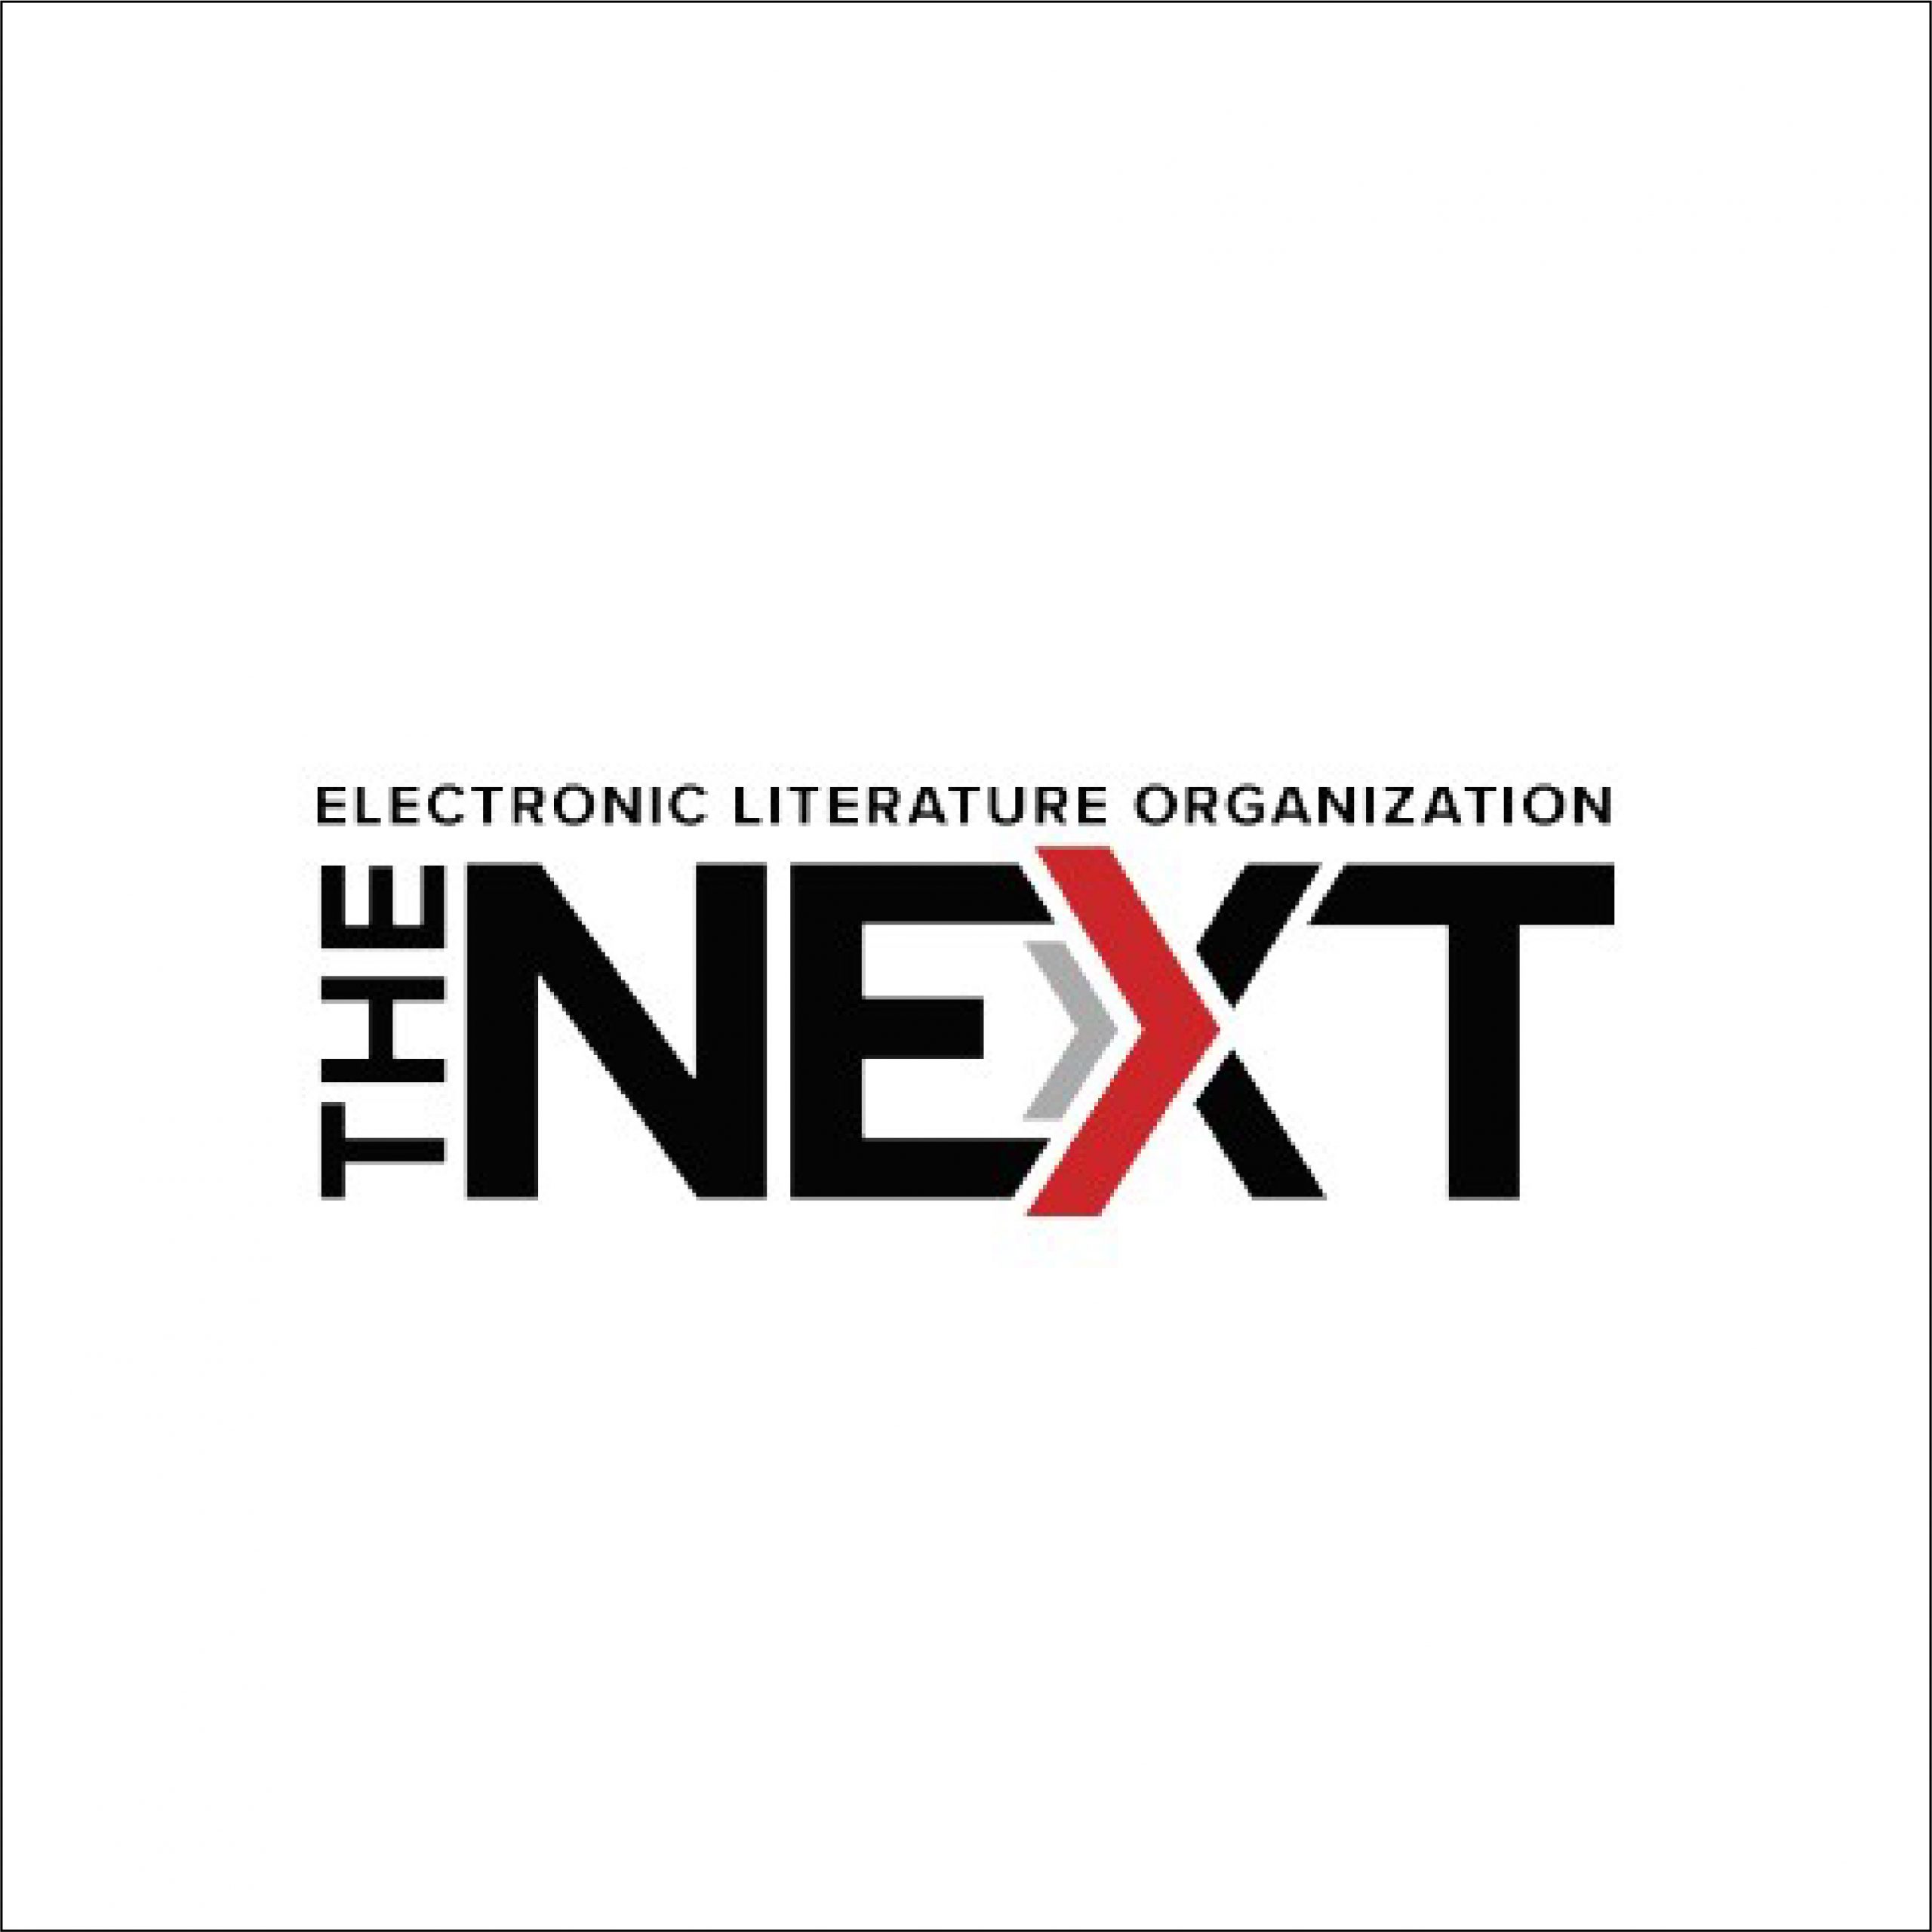 Electronic Literature Organization’s The NEXT